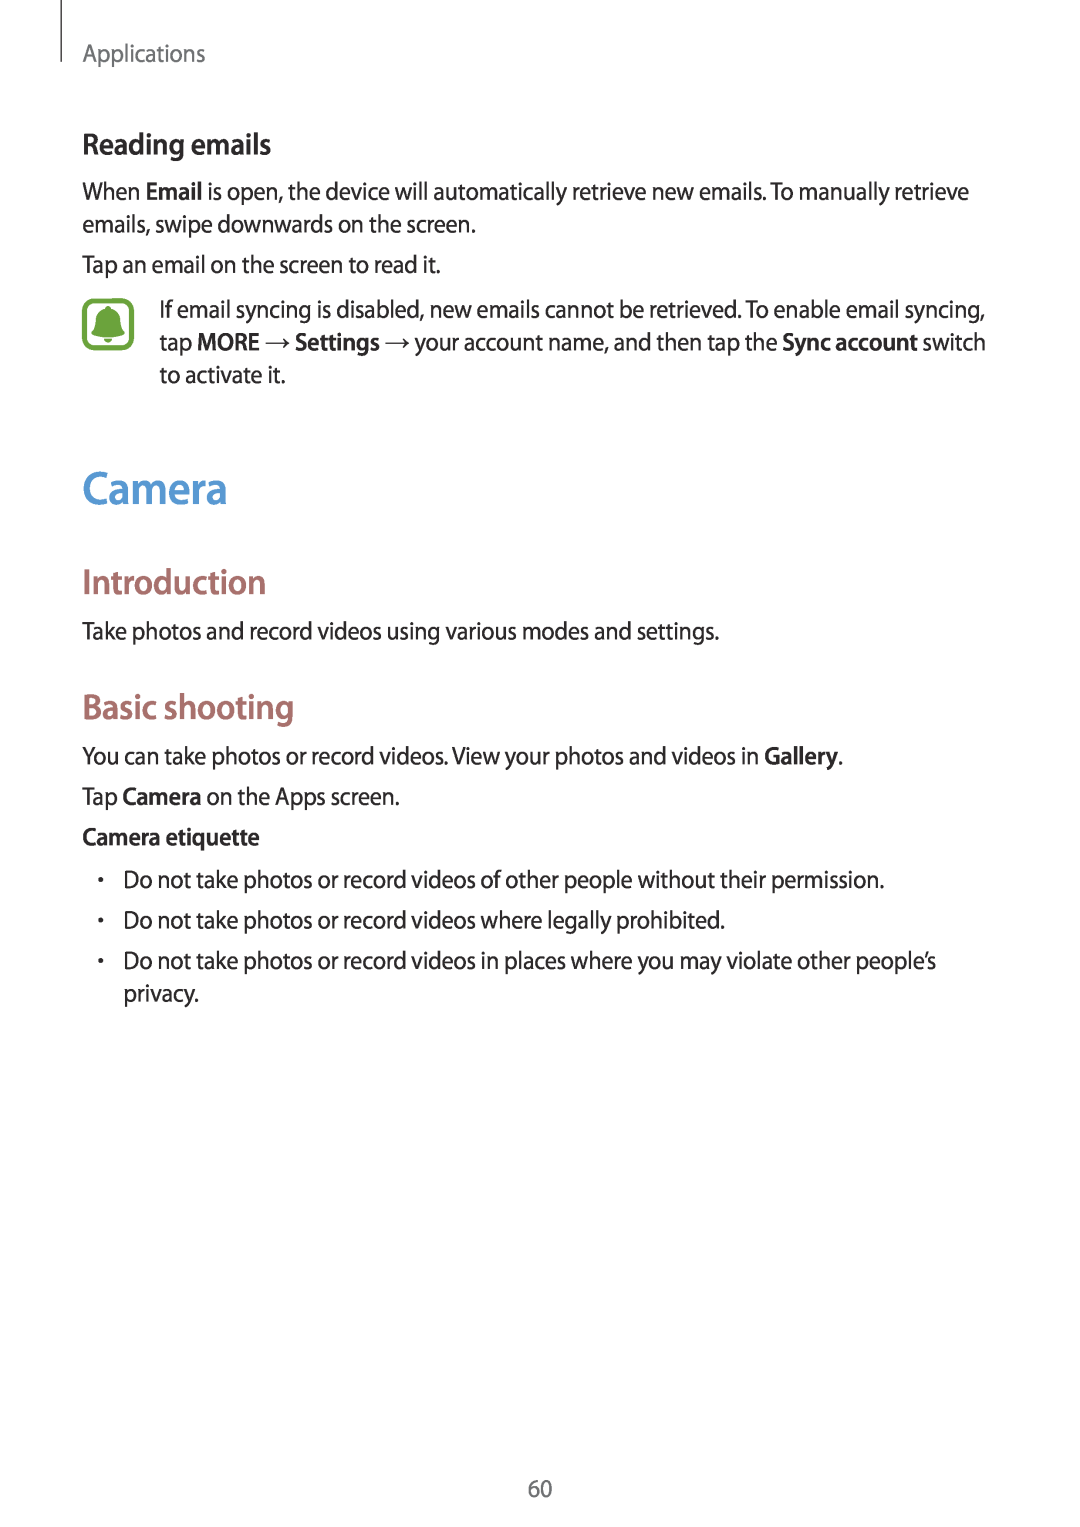 Samsung SM-T819NZKEPHE, SM-T819NZKEDBT Basic shooting, Reading emails, Camera etiquette, Introduction, Applications 